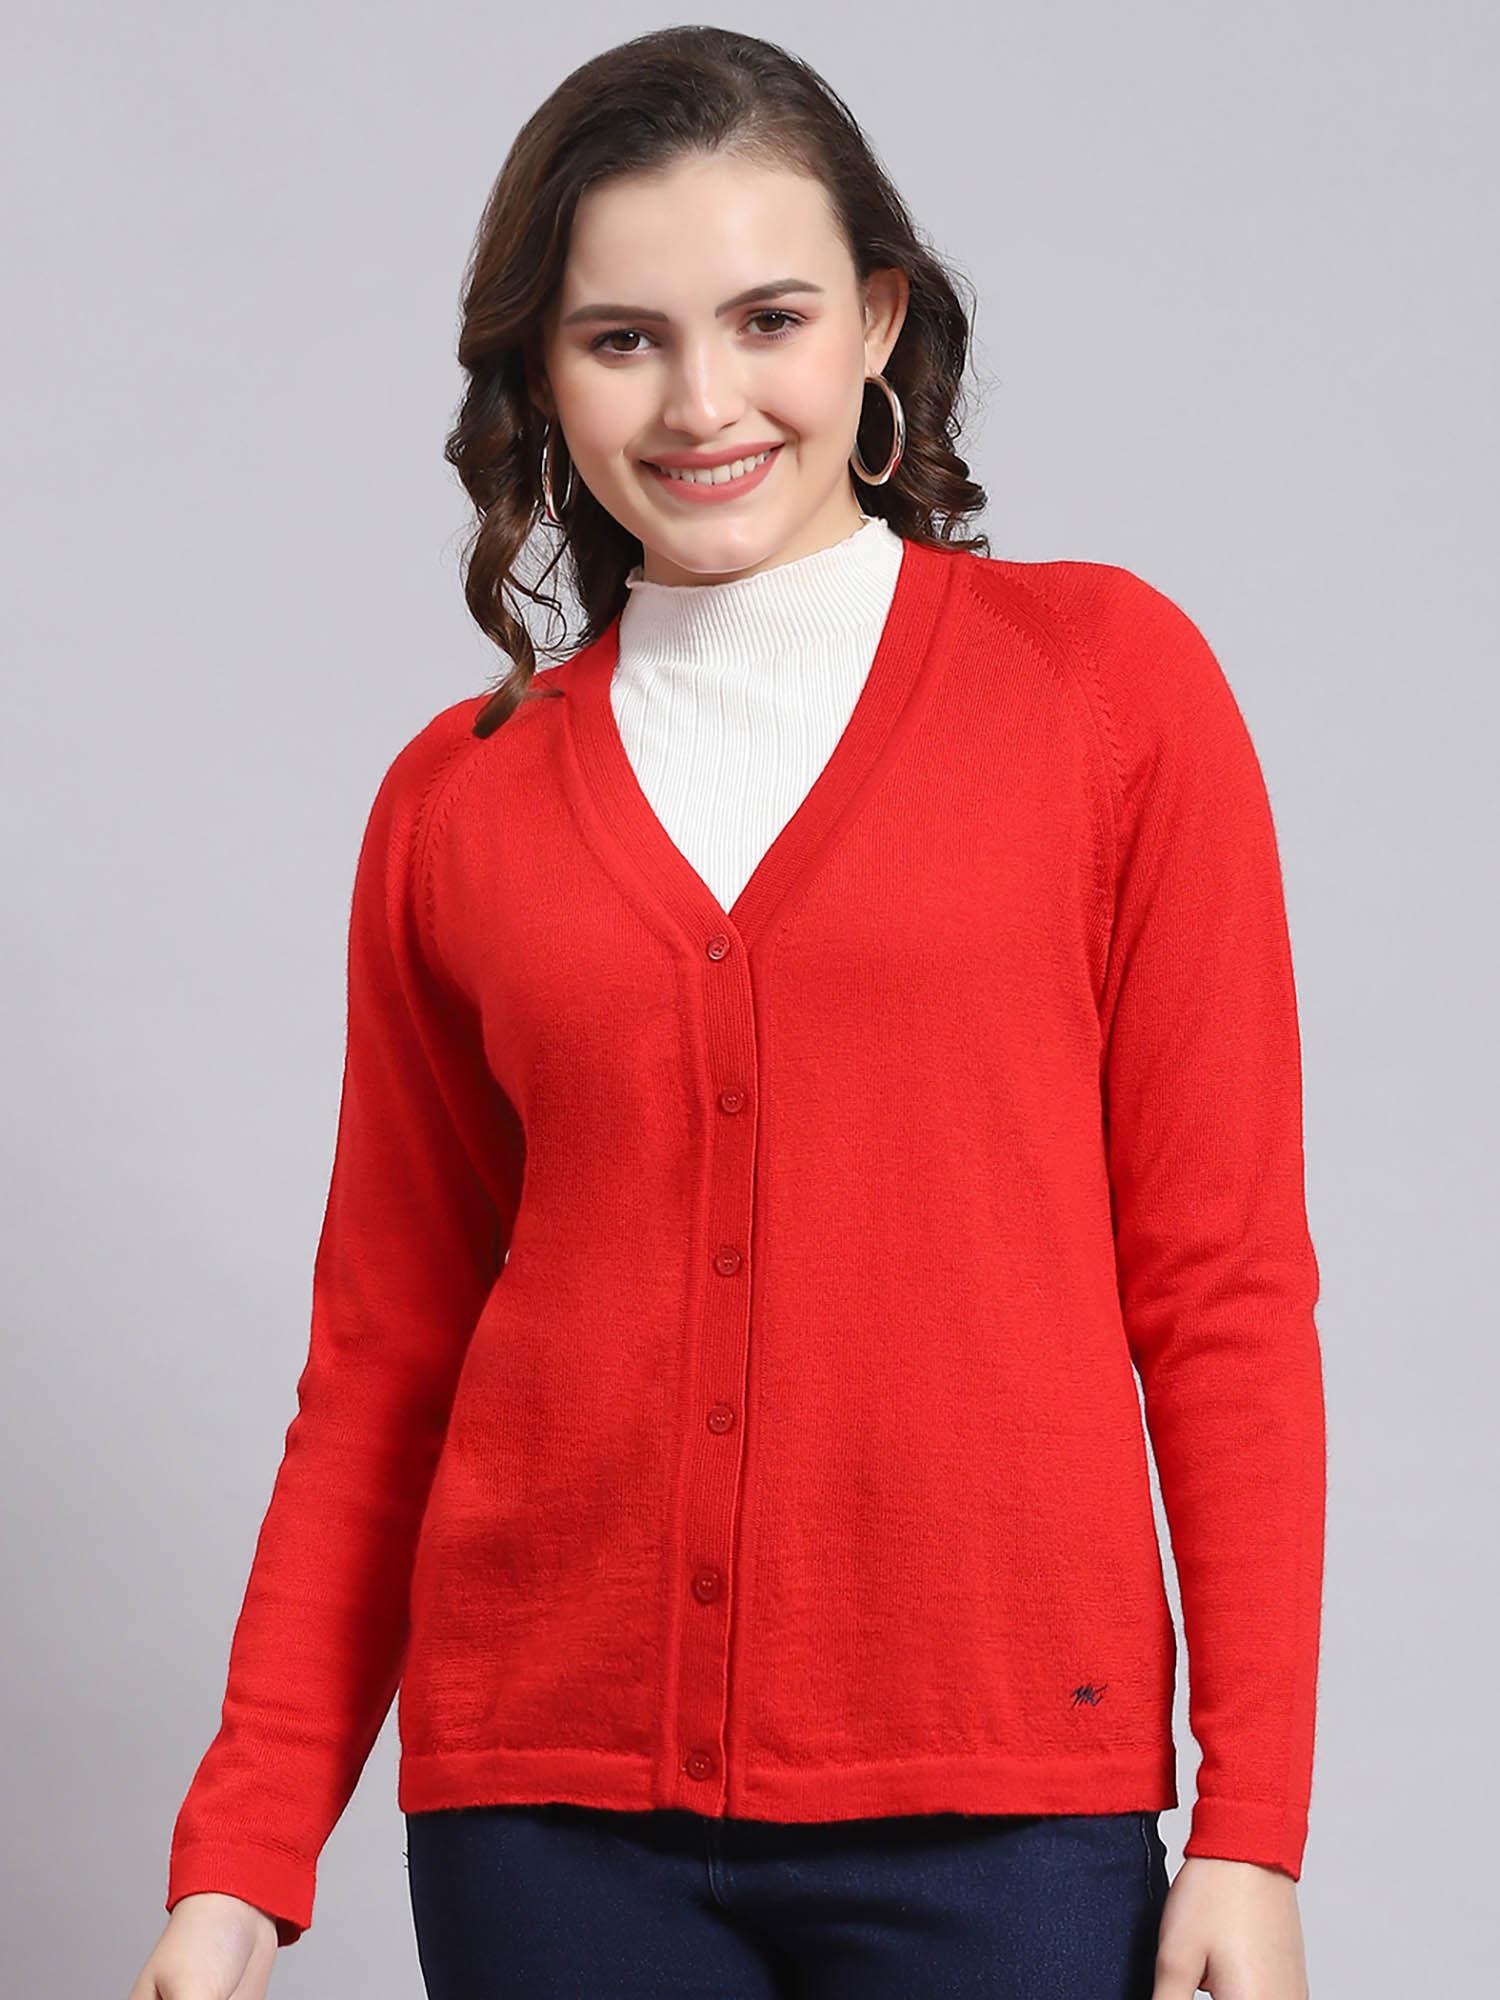 women-solid-full-sleeves-v-neck-red-cardigan